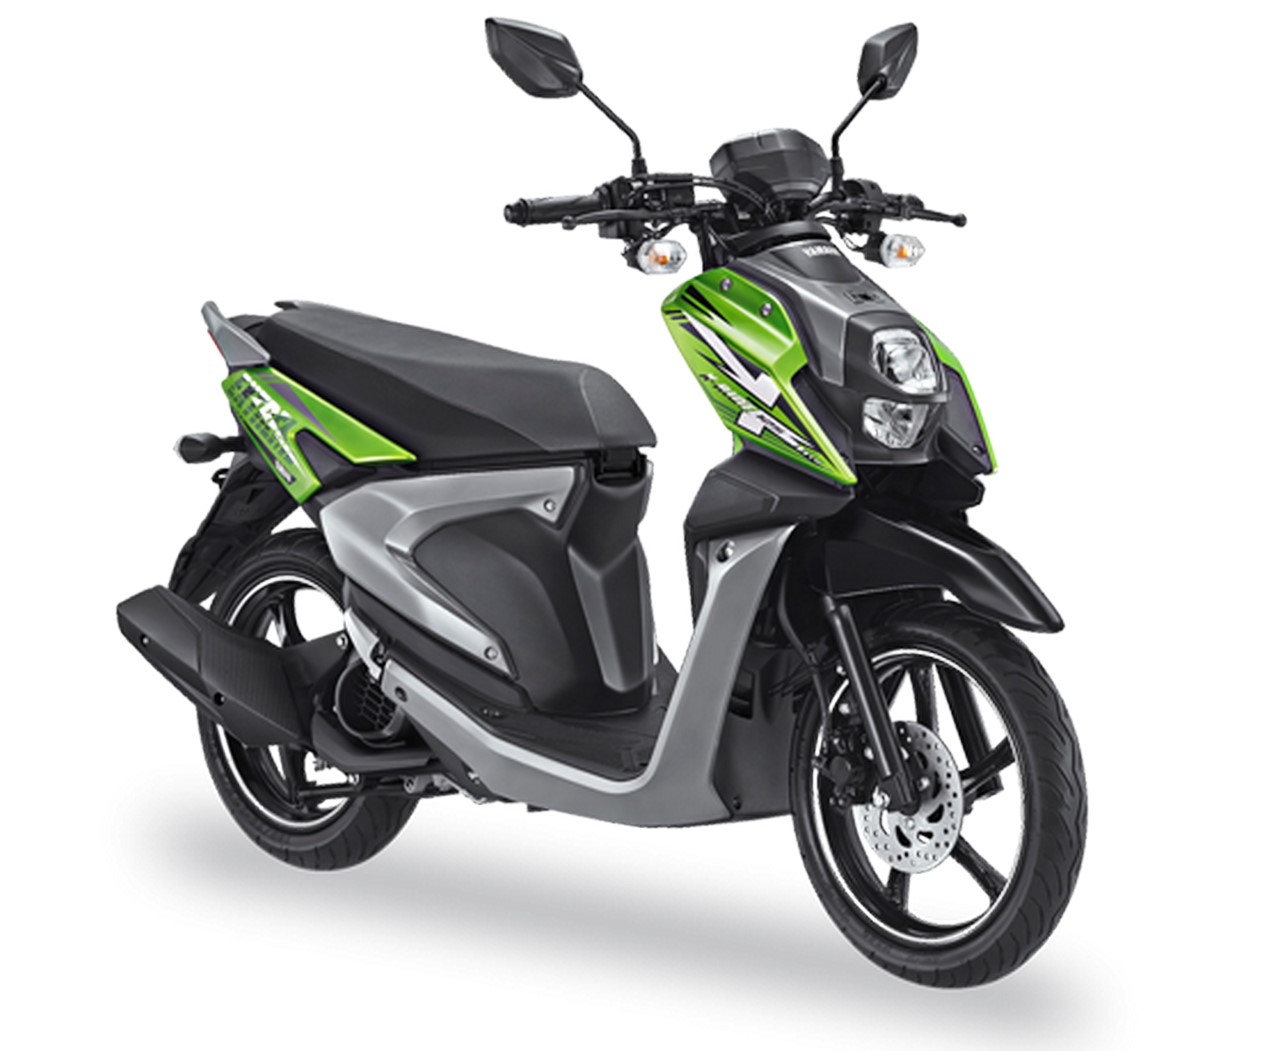 Yamaha X-Ride 125 launched at Jakarta Fair 2017